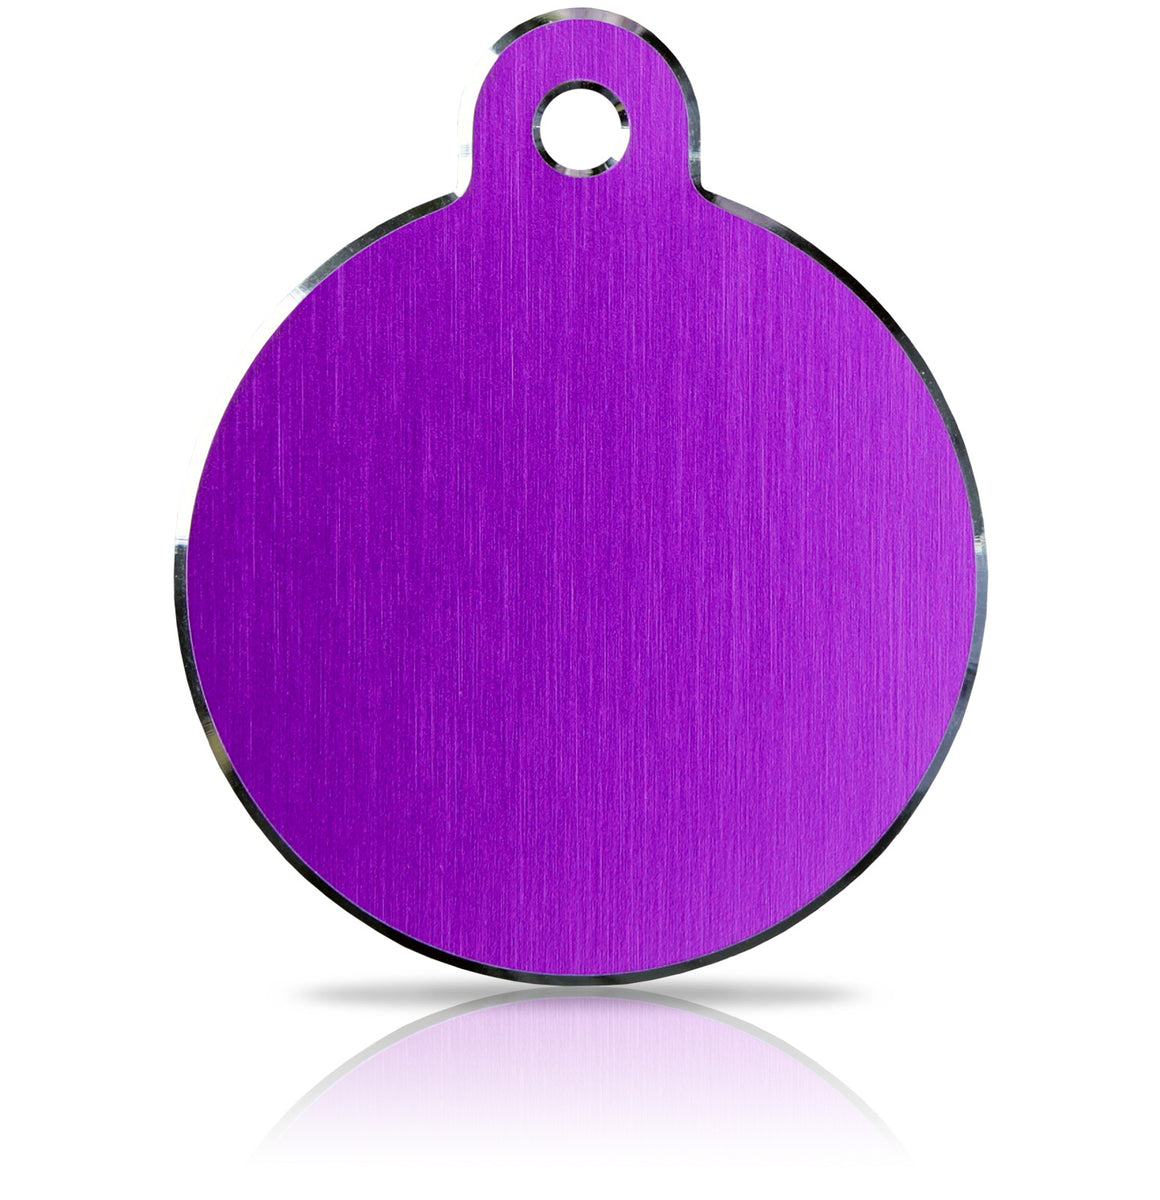 TaggIT Hi-Line Large Disc Purple iMarc Pet Engraving Tag